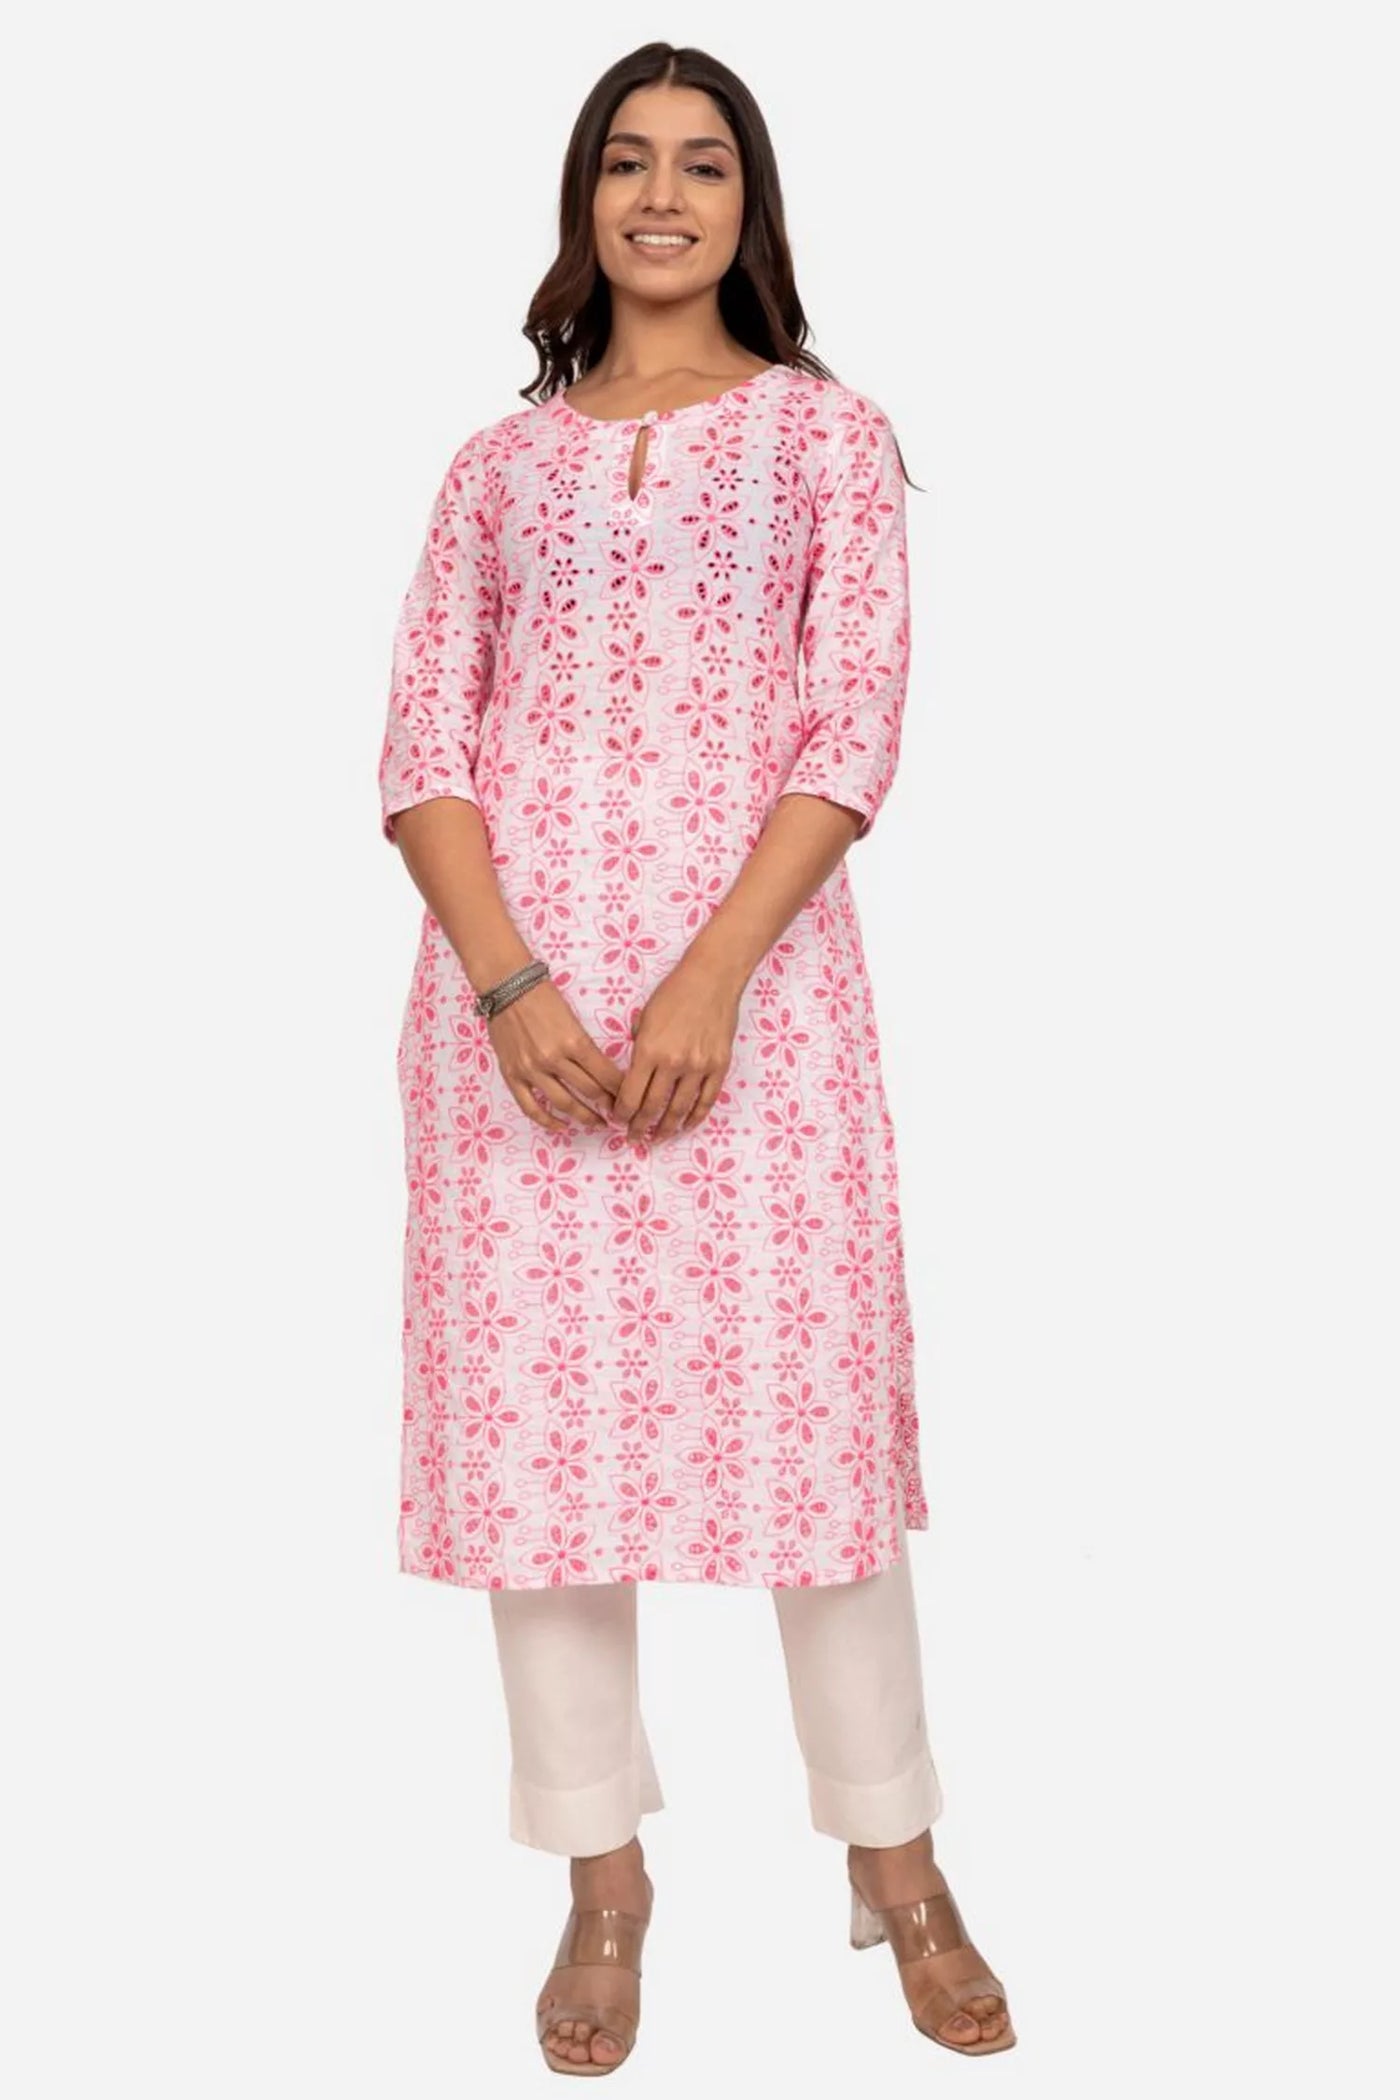 Neon Green Pink Printed Embroidered Kurti With Gota Salwaar, एम्ब्रॉइडरेड  कुर्ता - Anokherang Collections OPC Private Limited, Delhi | ID:  2849558455833